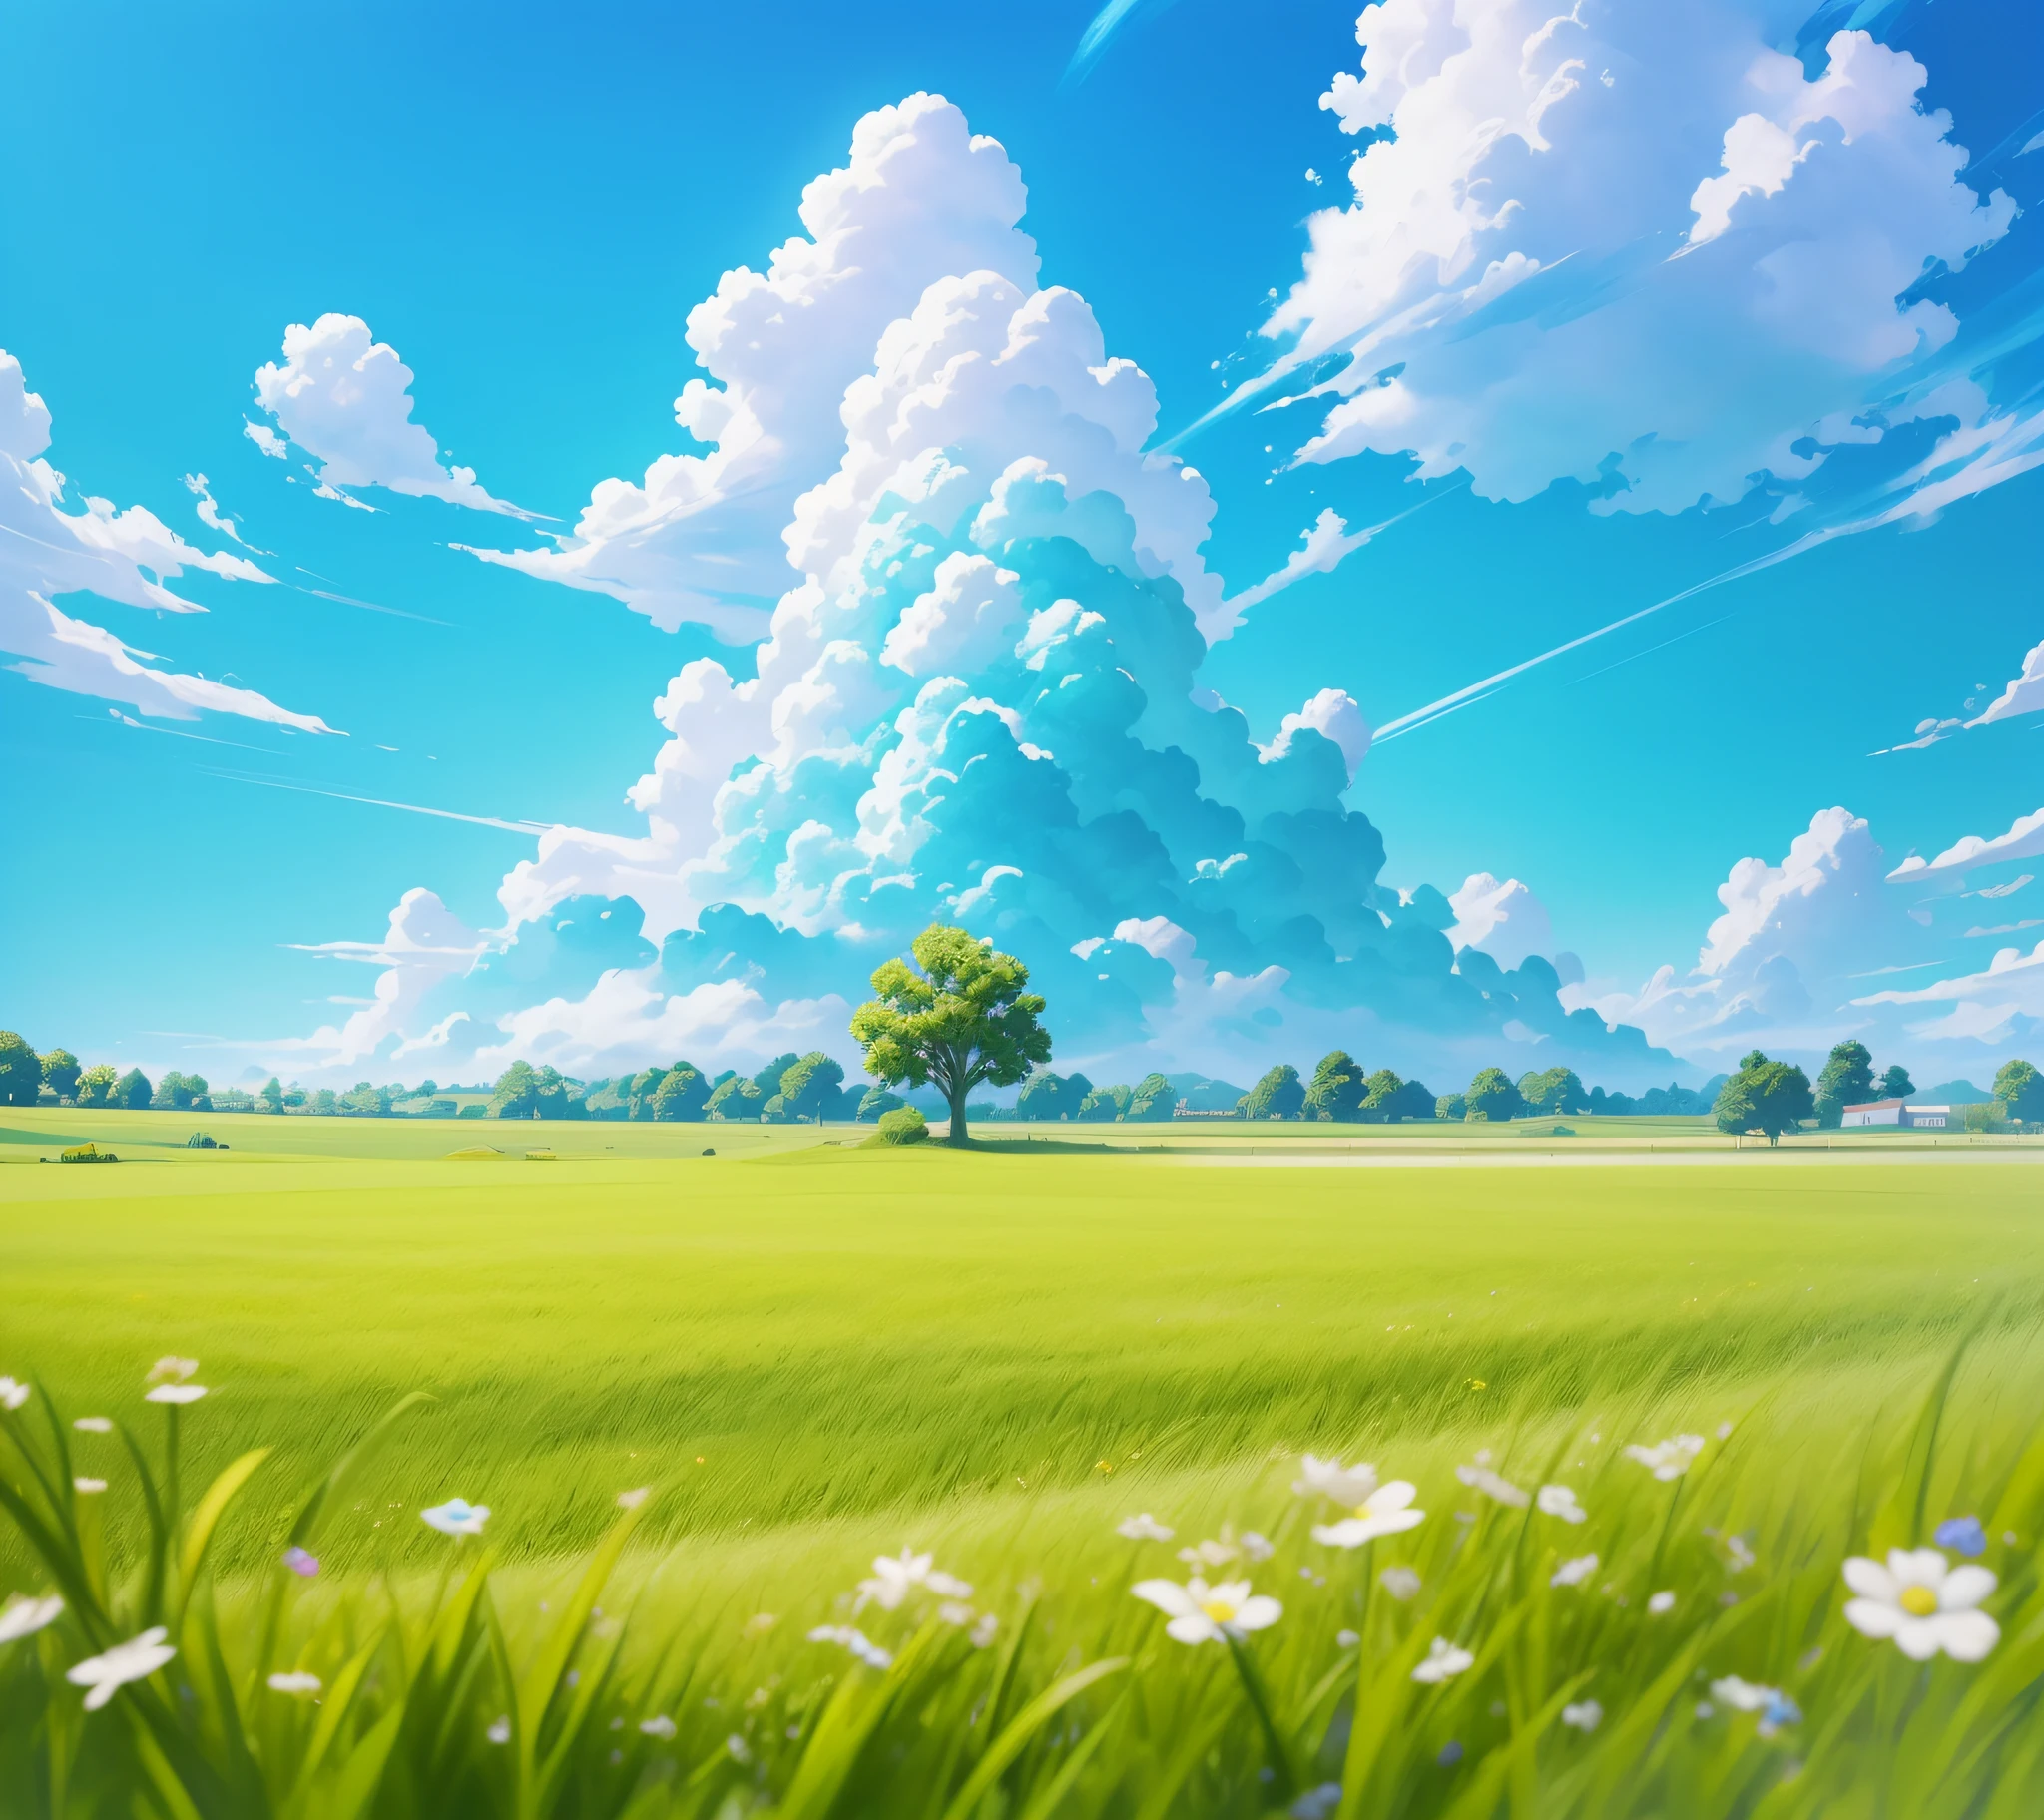 Anime Leaf Grass Painting Green Background स्टॉक इलस्ट्रेशन 1704714730 |  Shutterstock